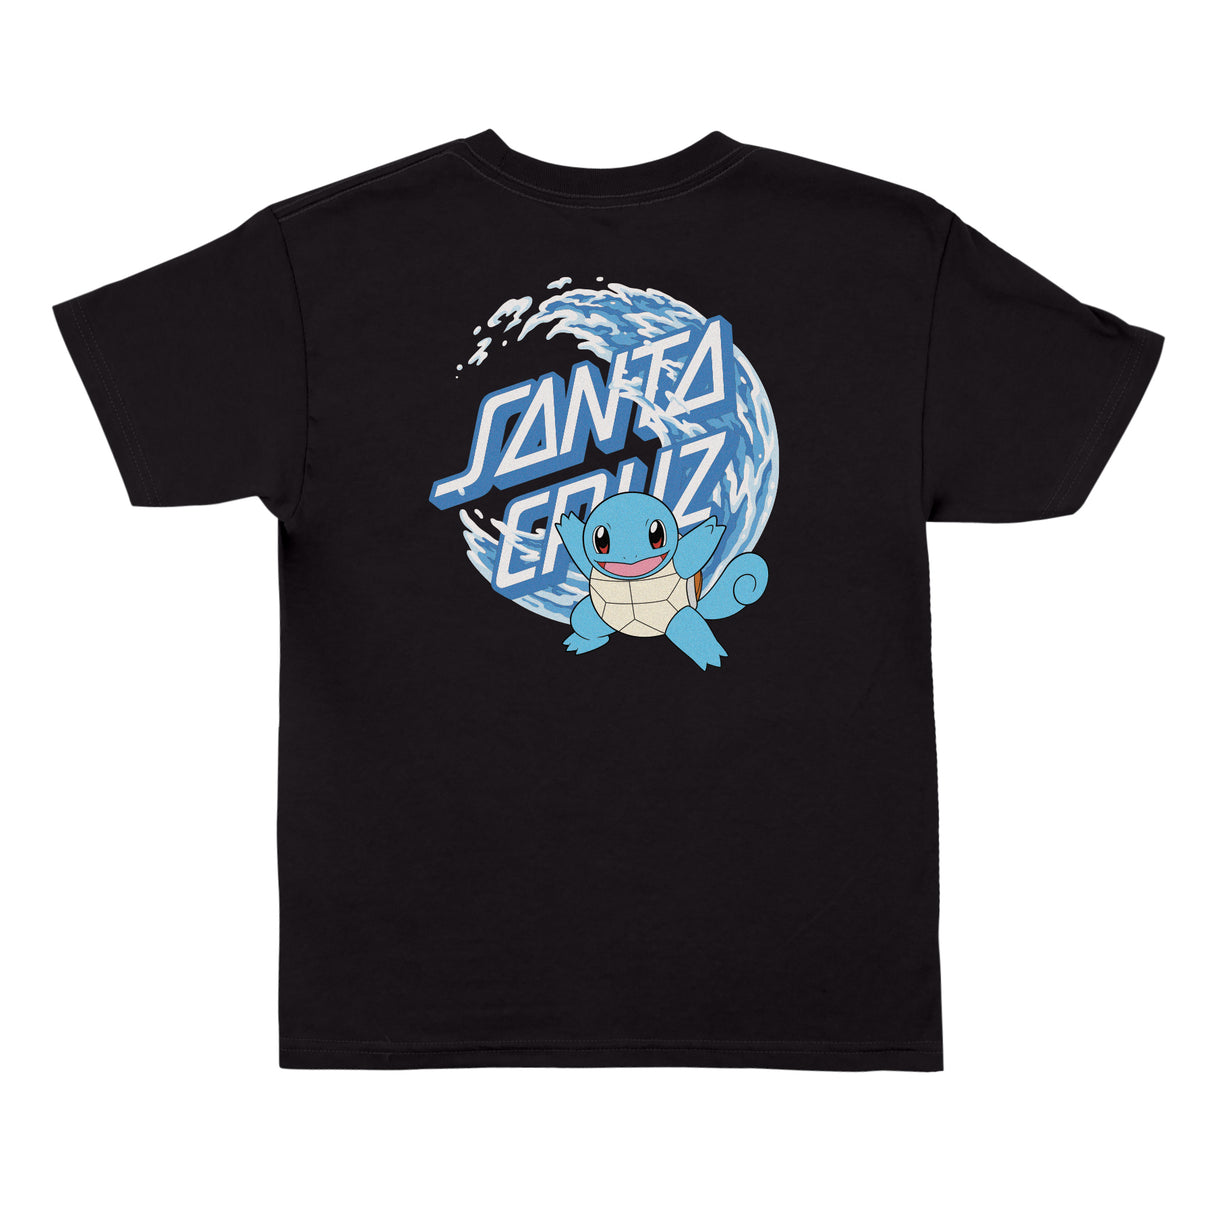 Santa Cruz x Pok√©mon Water Type 1 Black Midweight Youth S/s Shirt